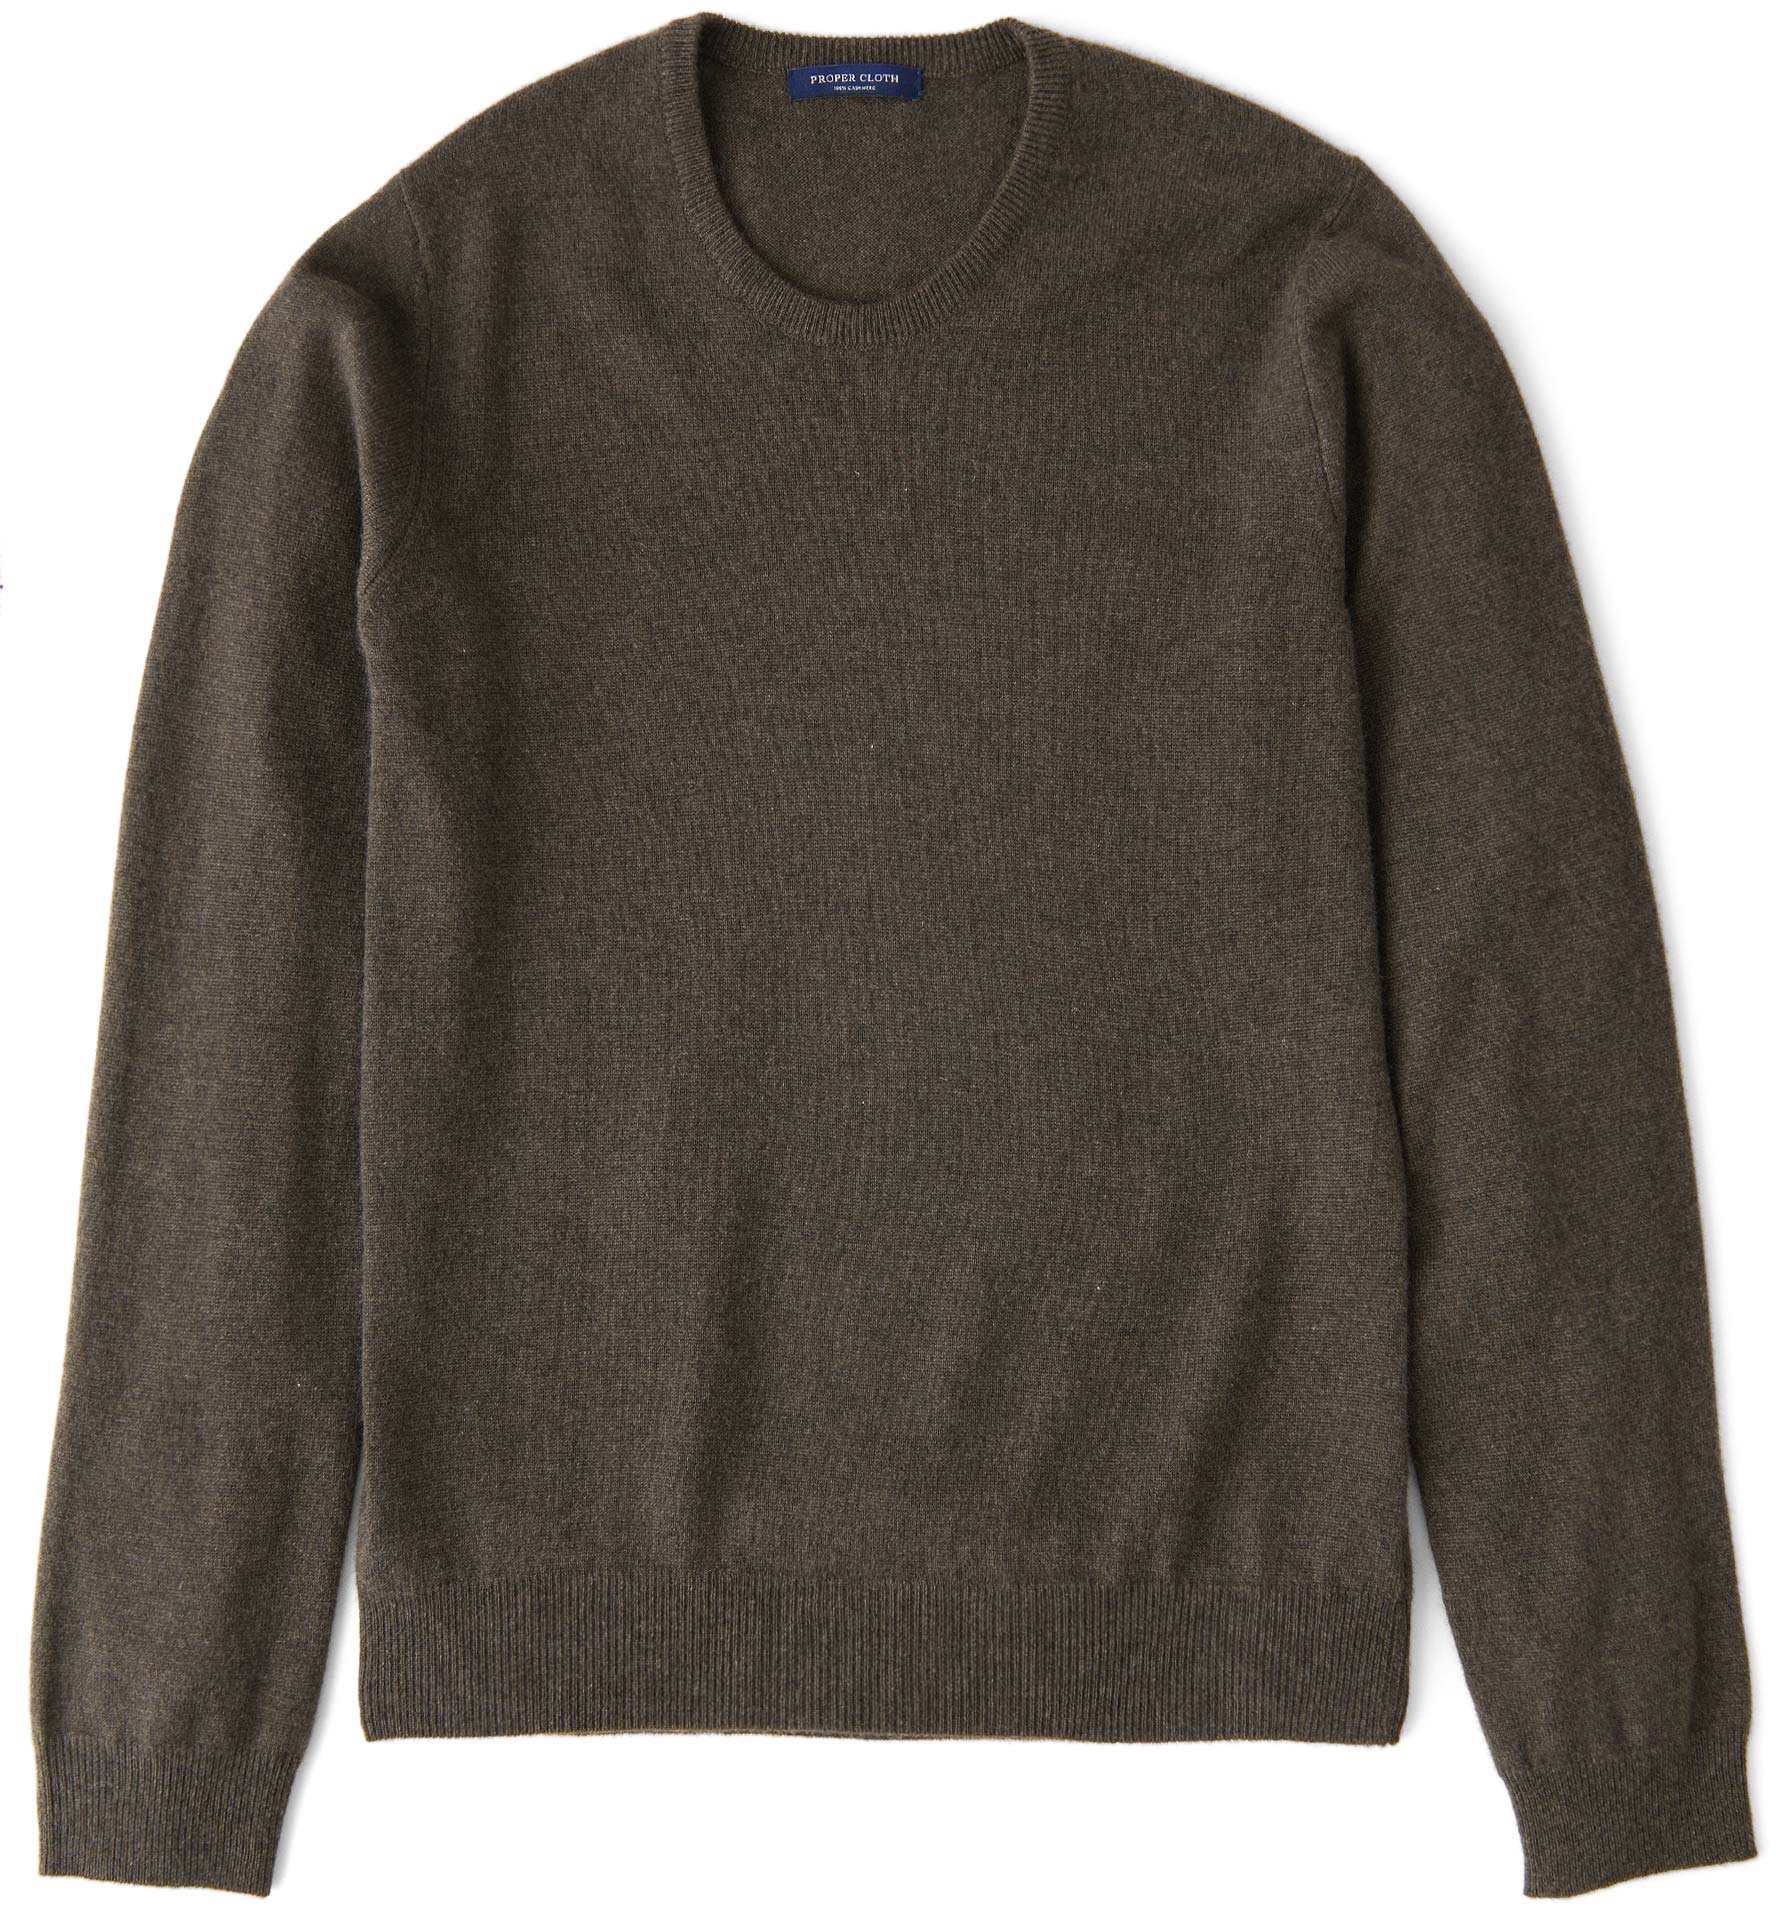 Pine Cashmere Crewneck Sweater by Proper Cloth